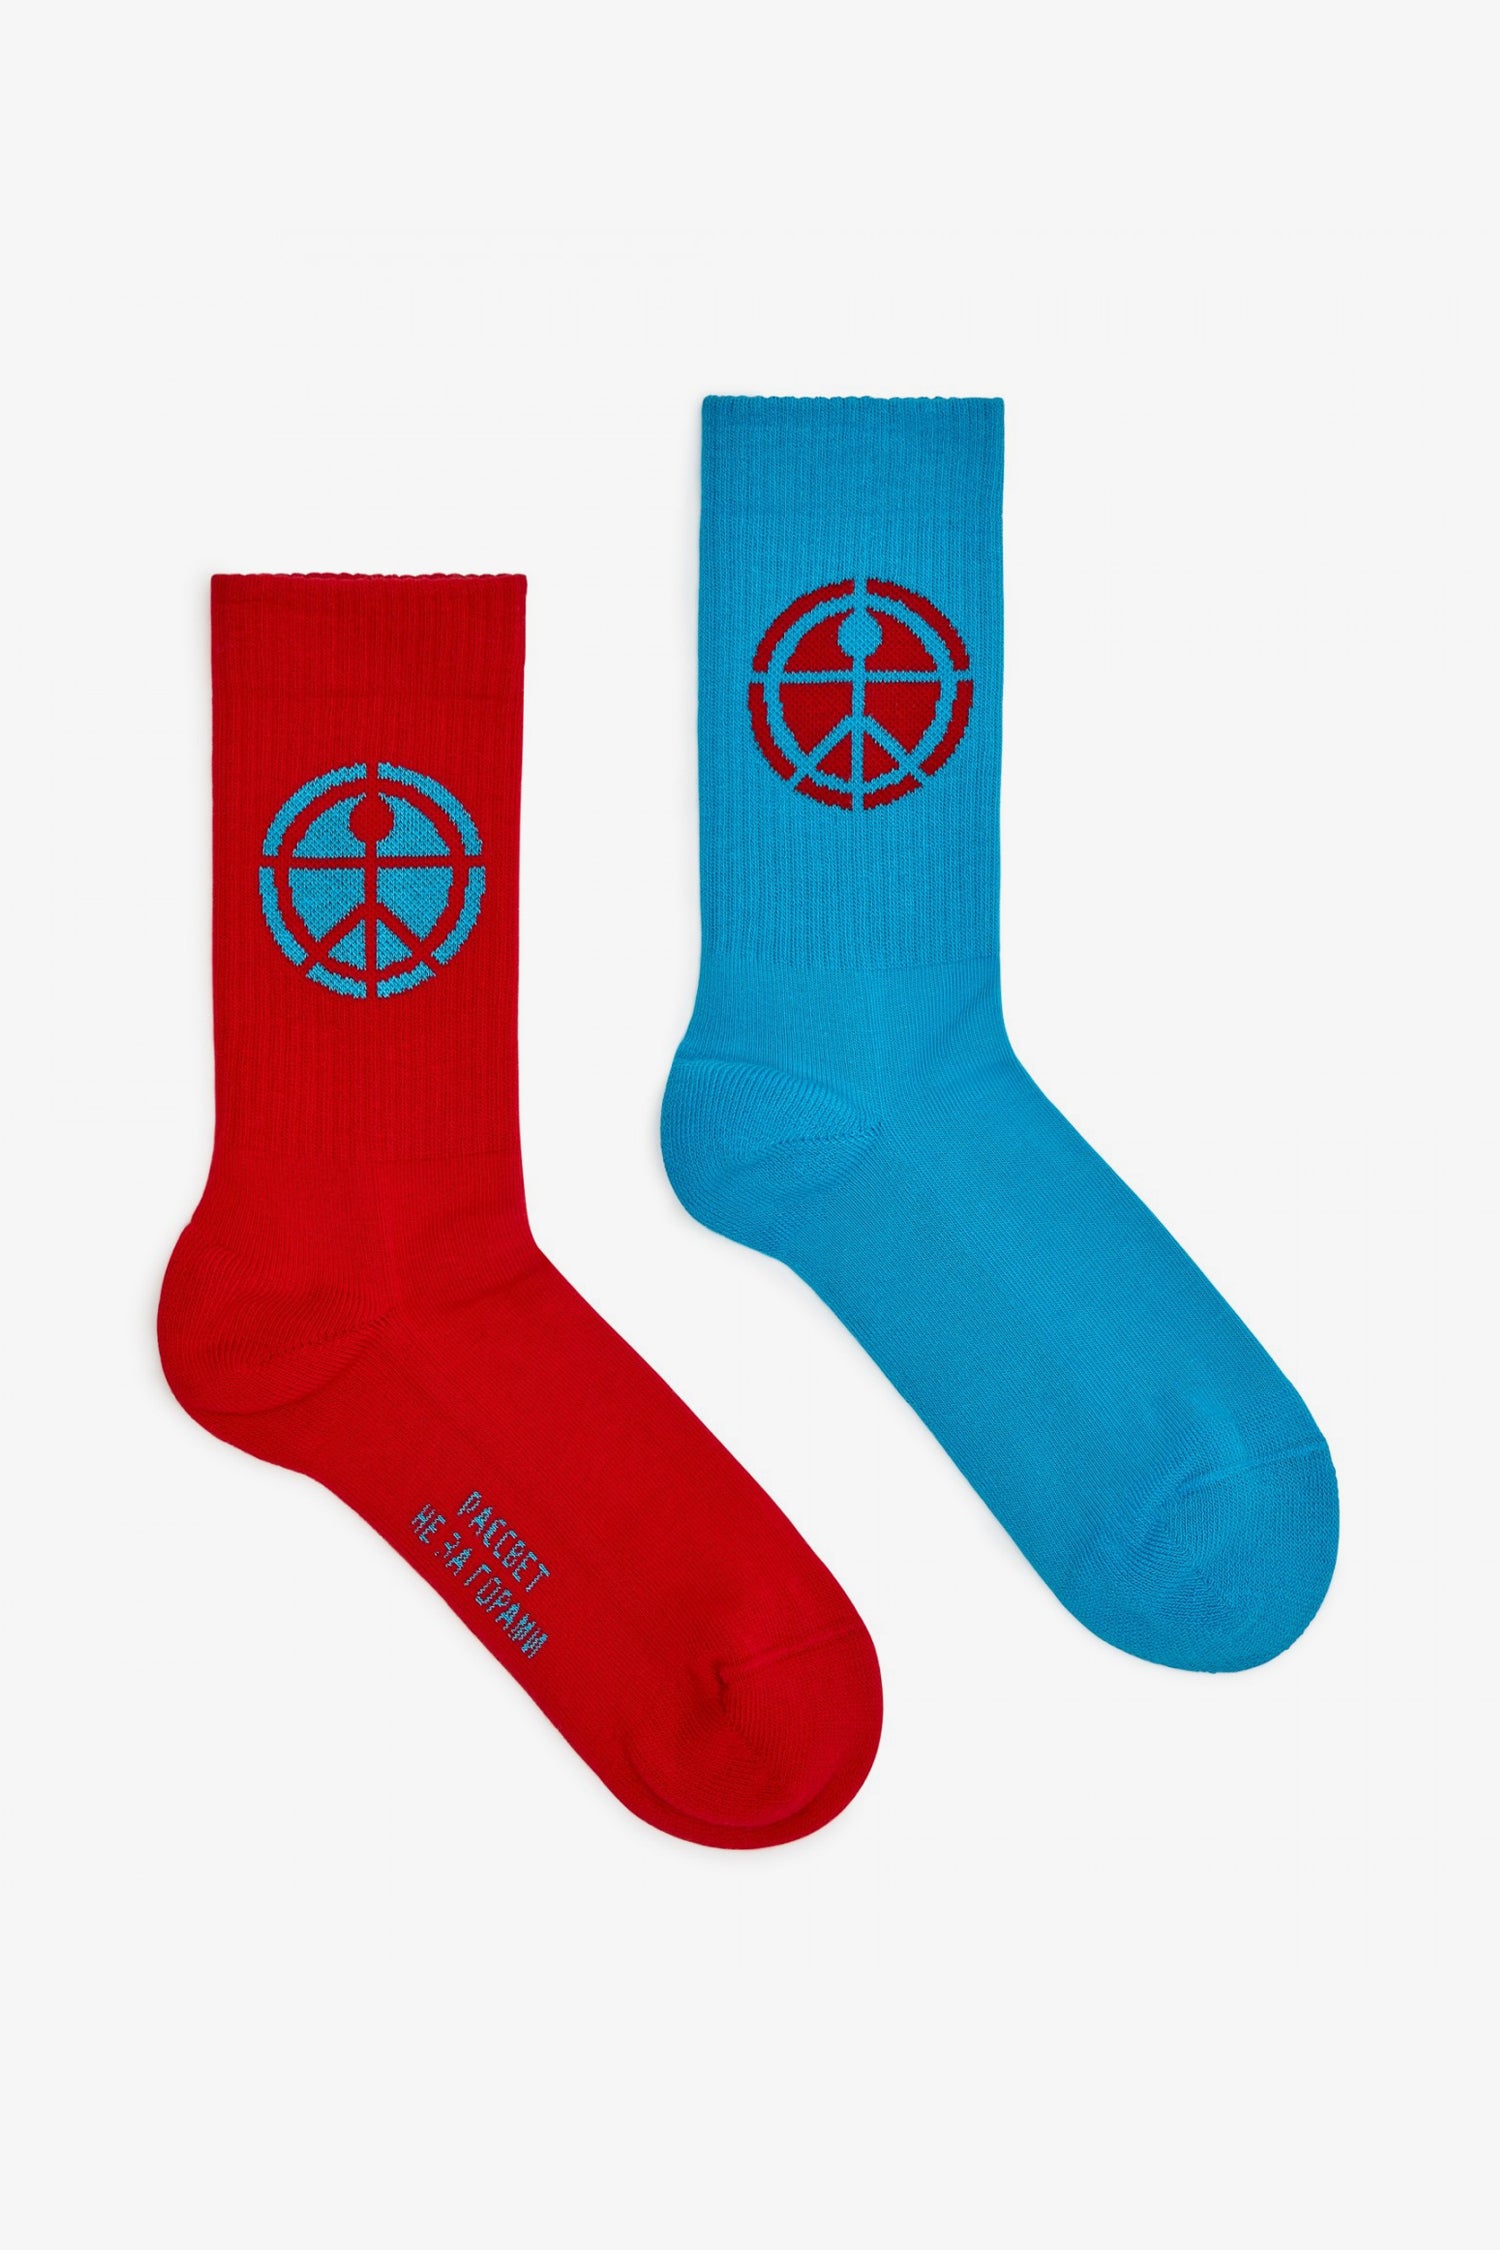 Selectshop FRAME - RASSVET Mismatched Socks socks Dubai